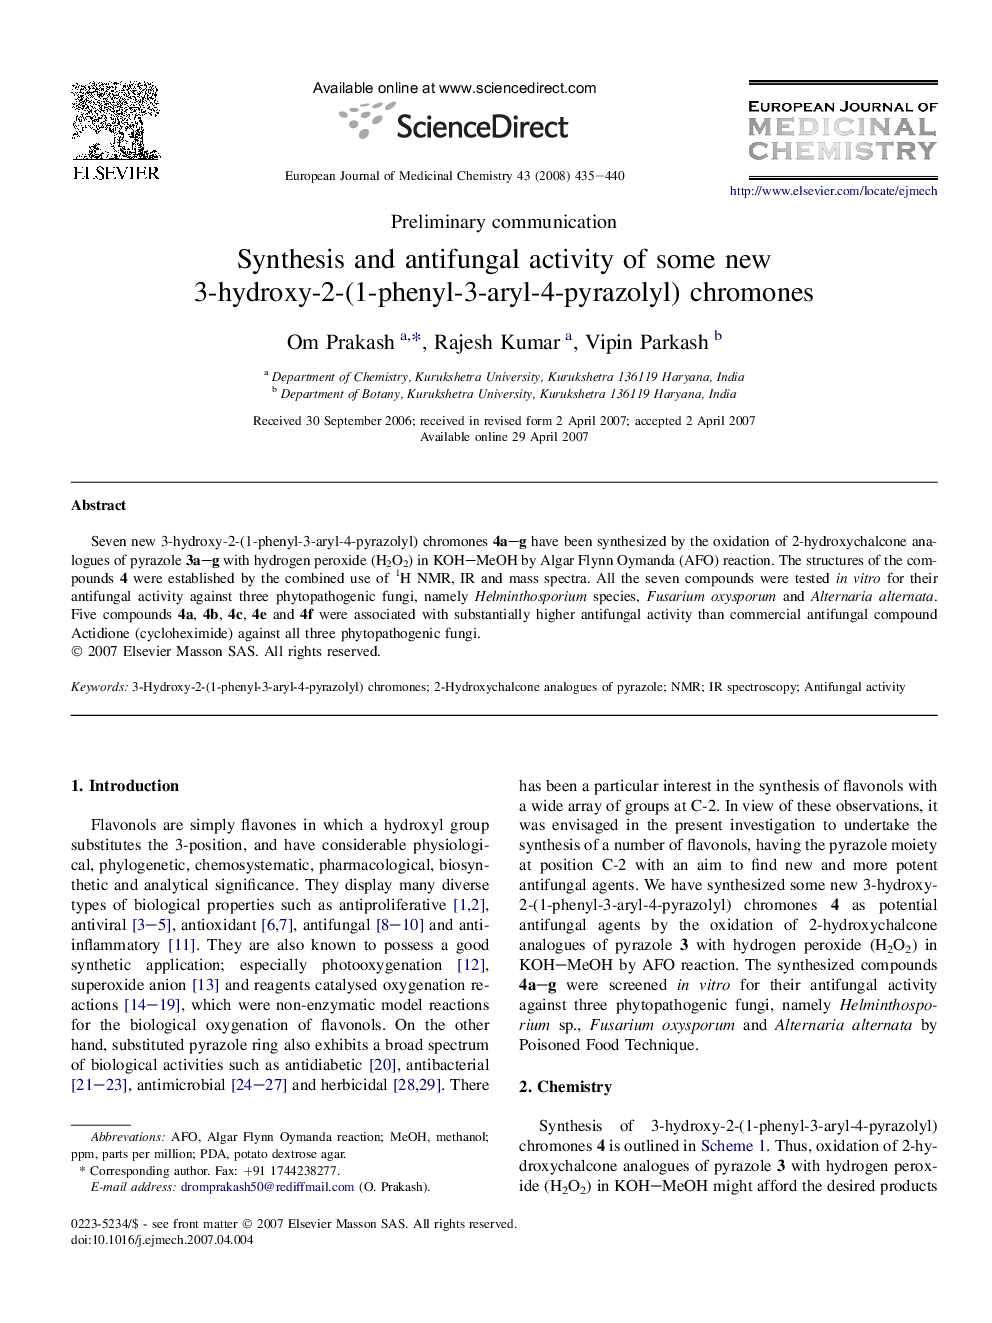 Synthesis and antifungal activity of some new 3-hydroxy-2-(1-phenyl-3-aryl-4-pyrazolyl) chromones